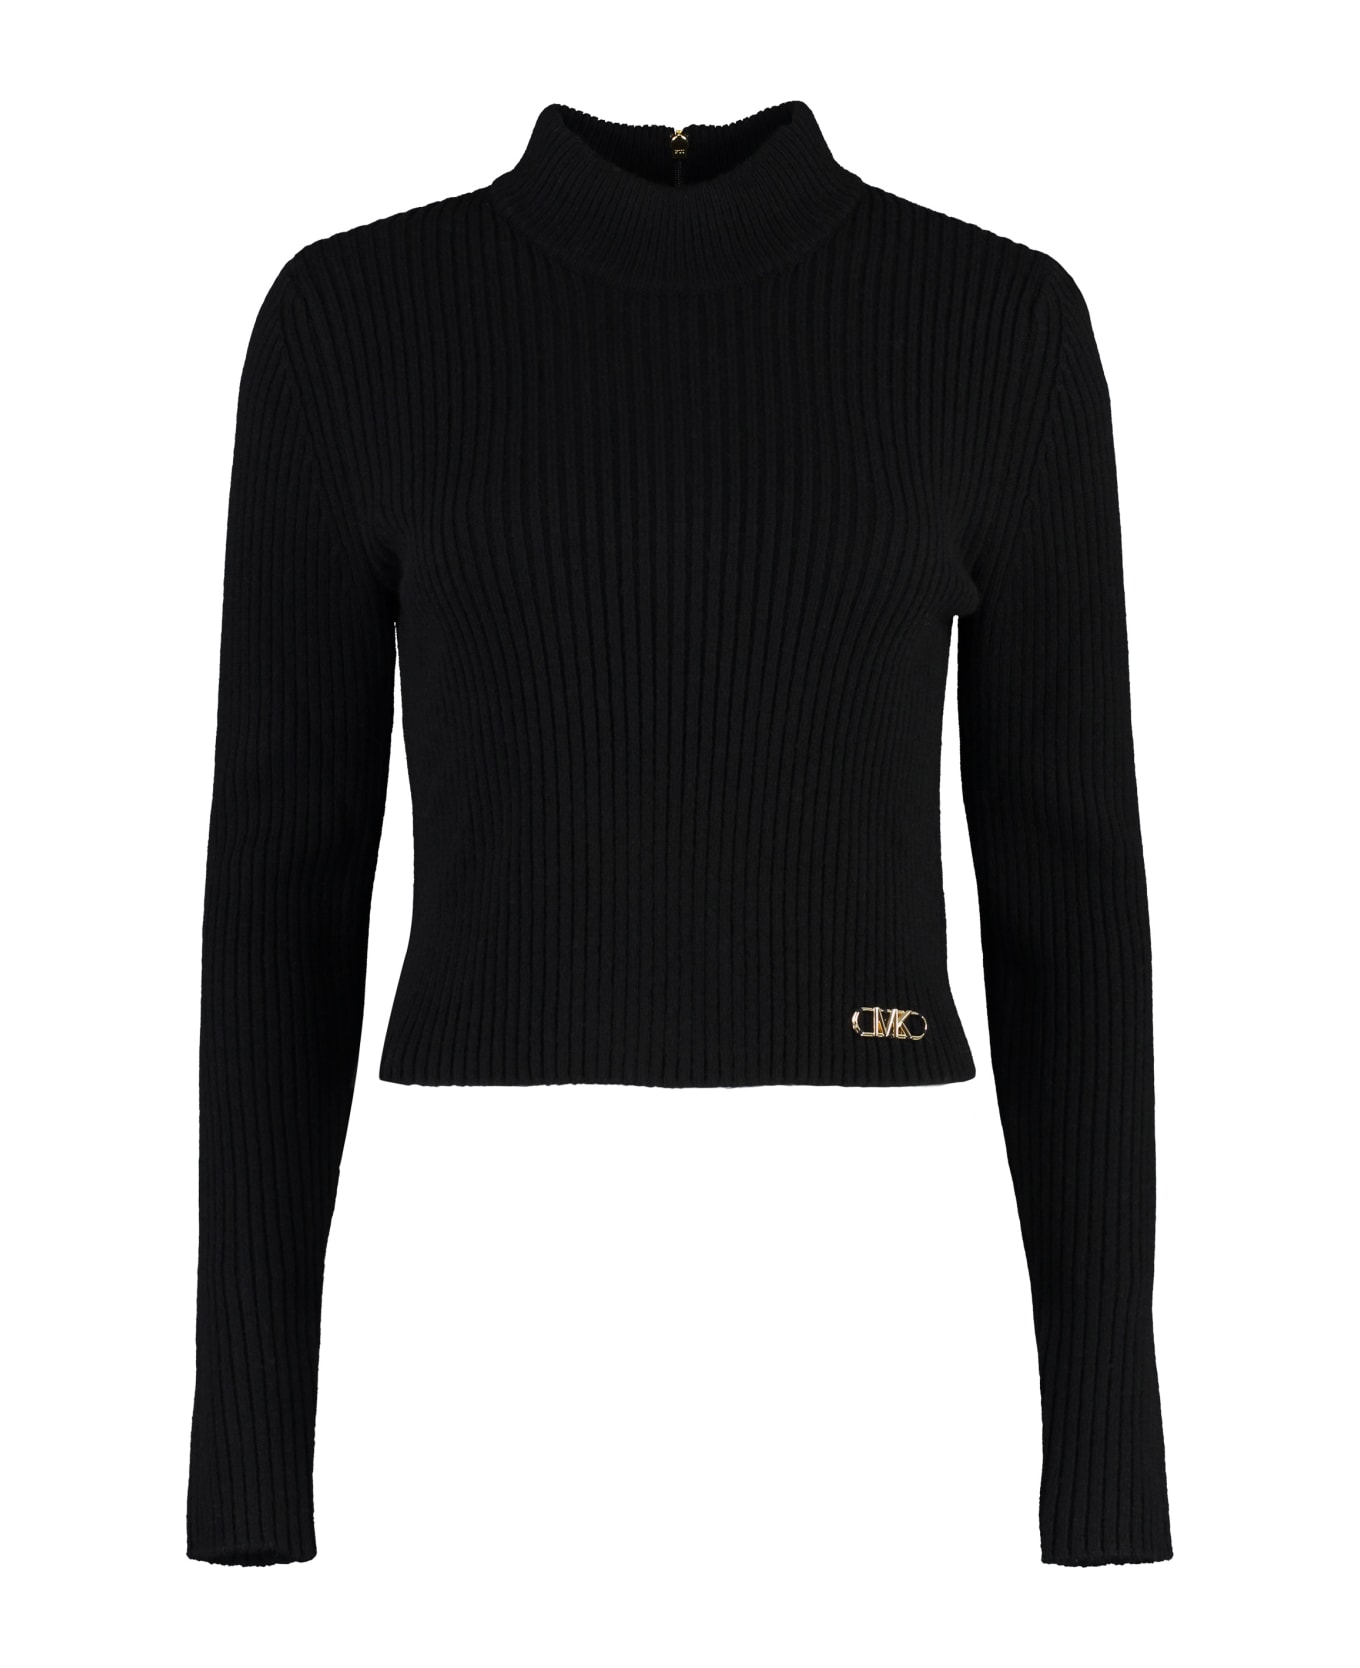 Michael Kors Collection Merino Wool Sweater - Black